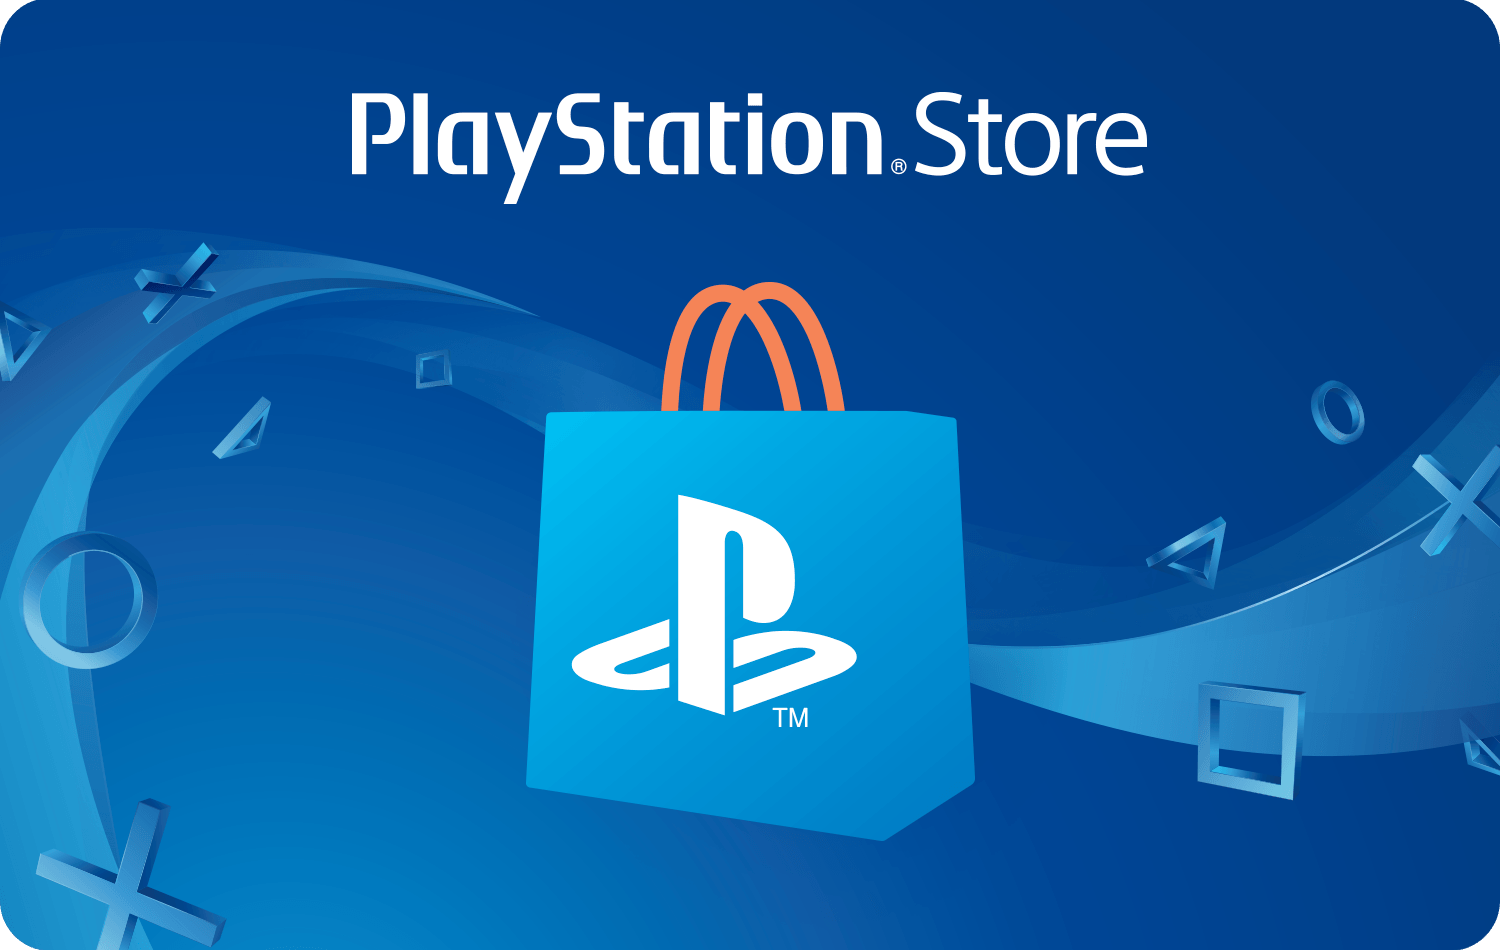 Playstation turkey store ps. Sony PLAYSTATION Store. Логотип PLAYSTATION Store. Турецкий PS Store. Магазин PLAYSTATION Store.